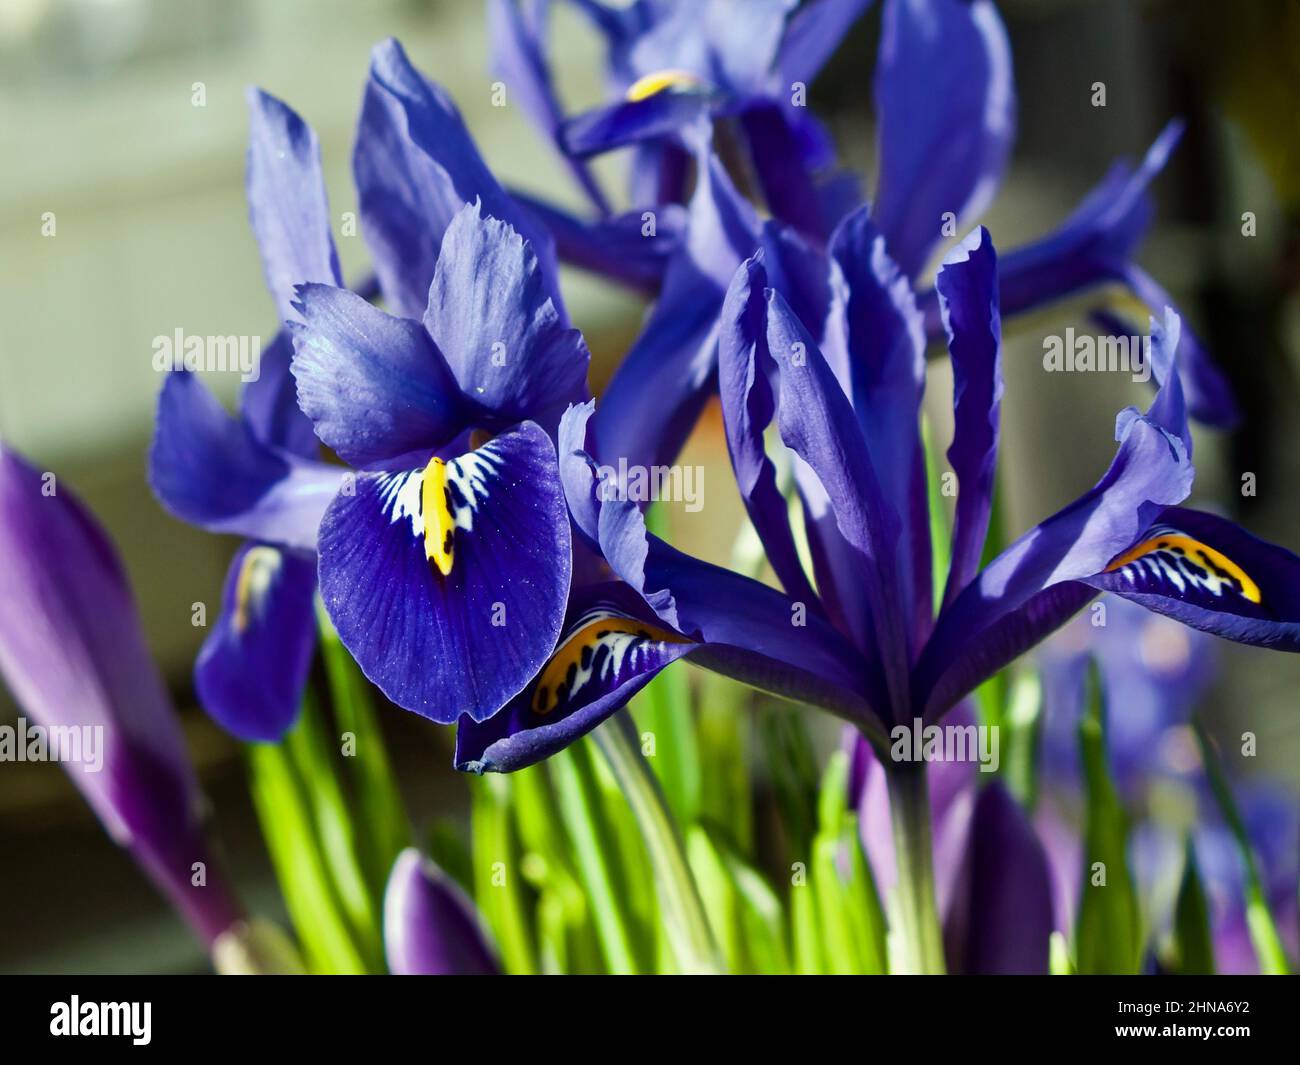 Blue dwarf iris and purple crocus in flowerpots for sale in spring. Stock Photo